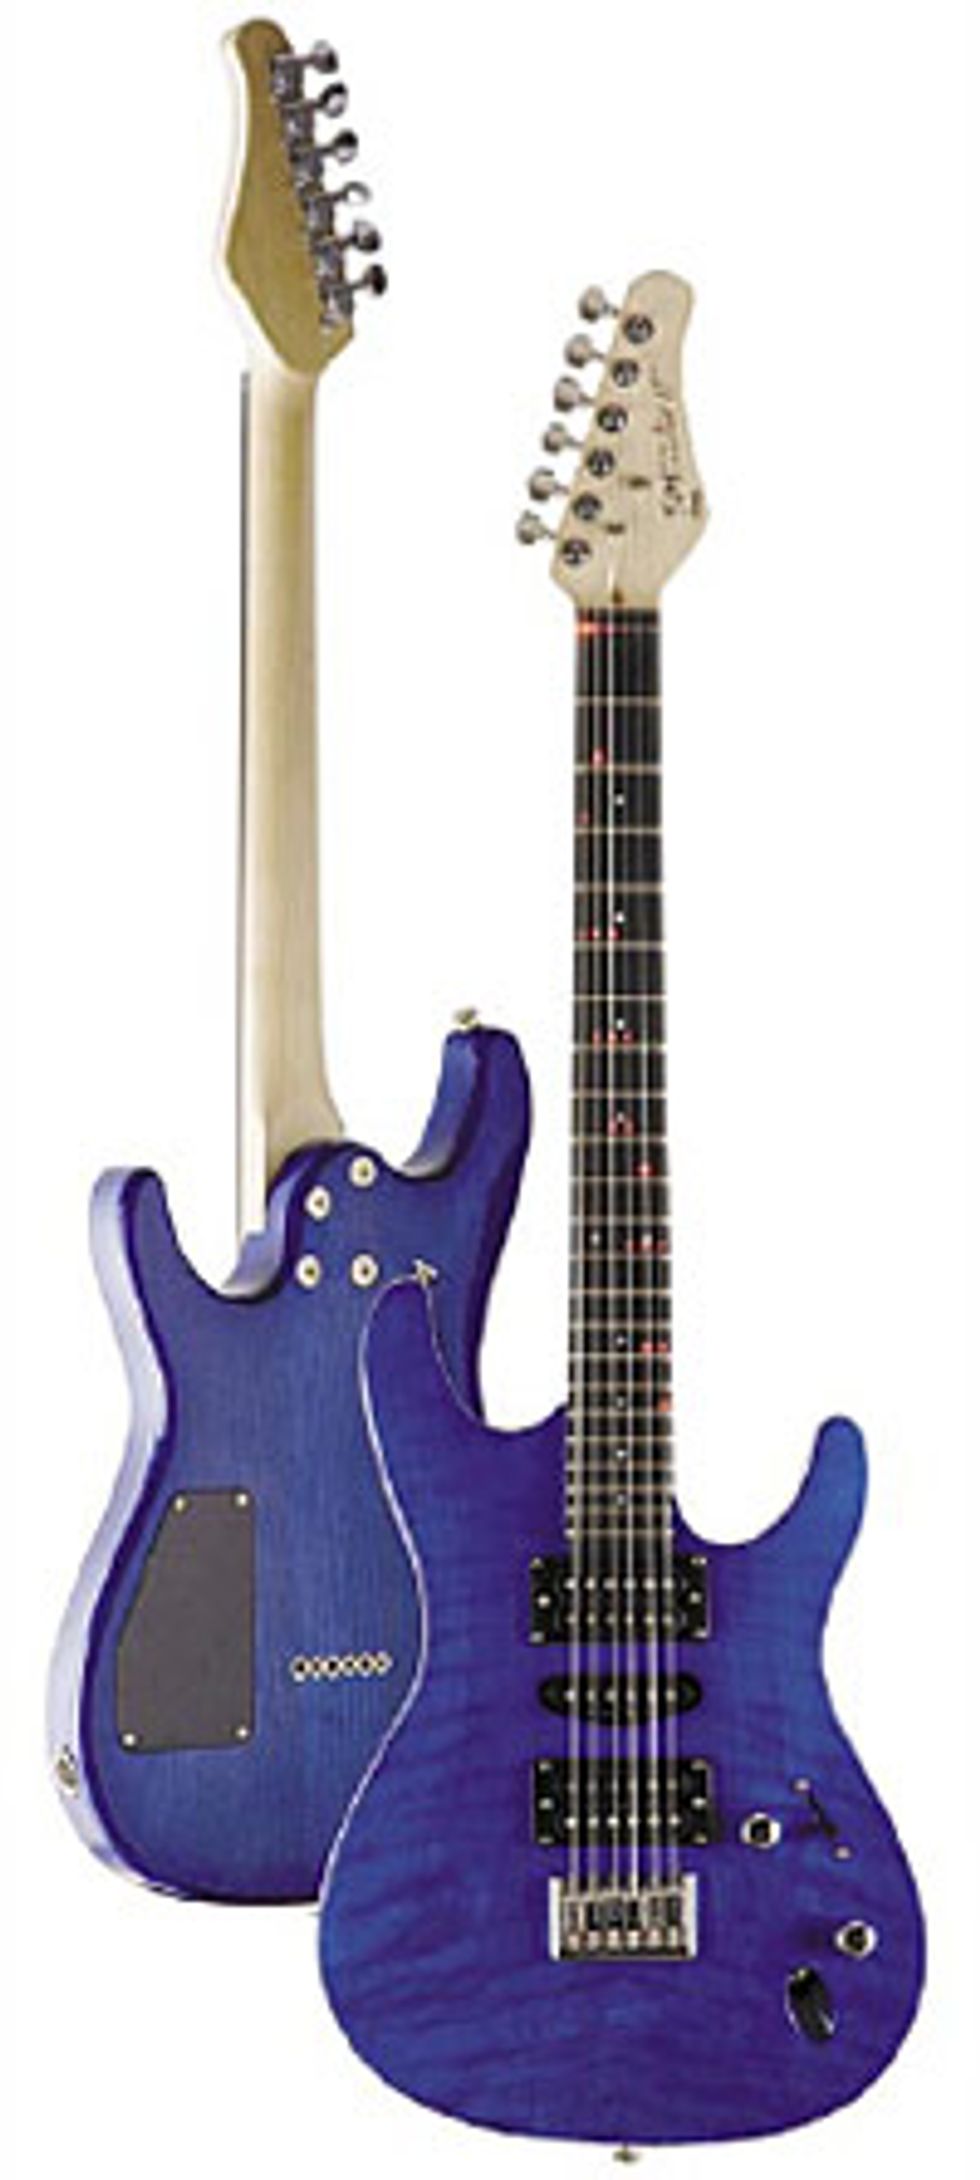 Fretlight FG-451 Pro Guitar